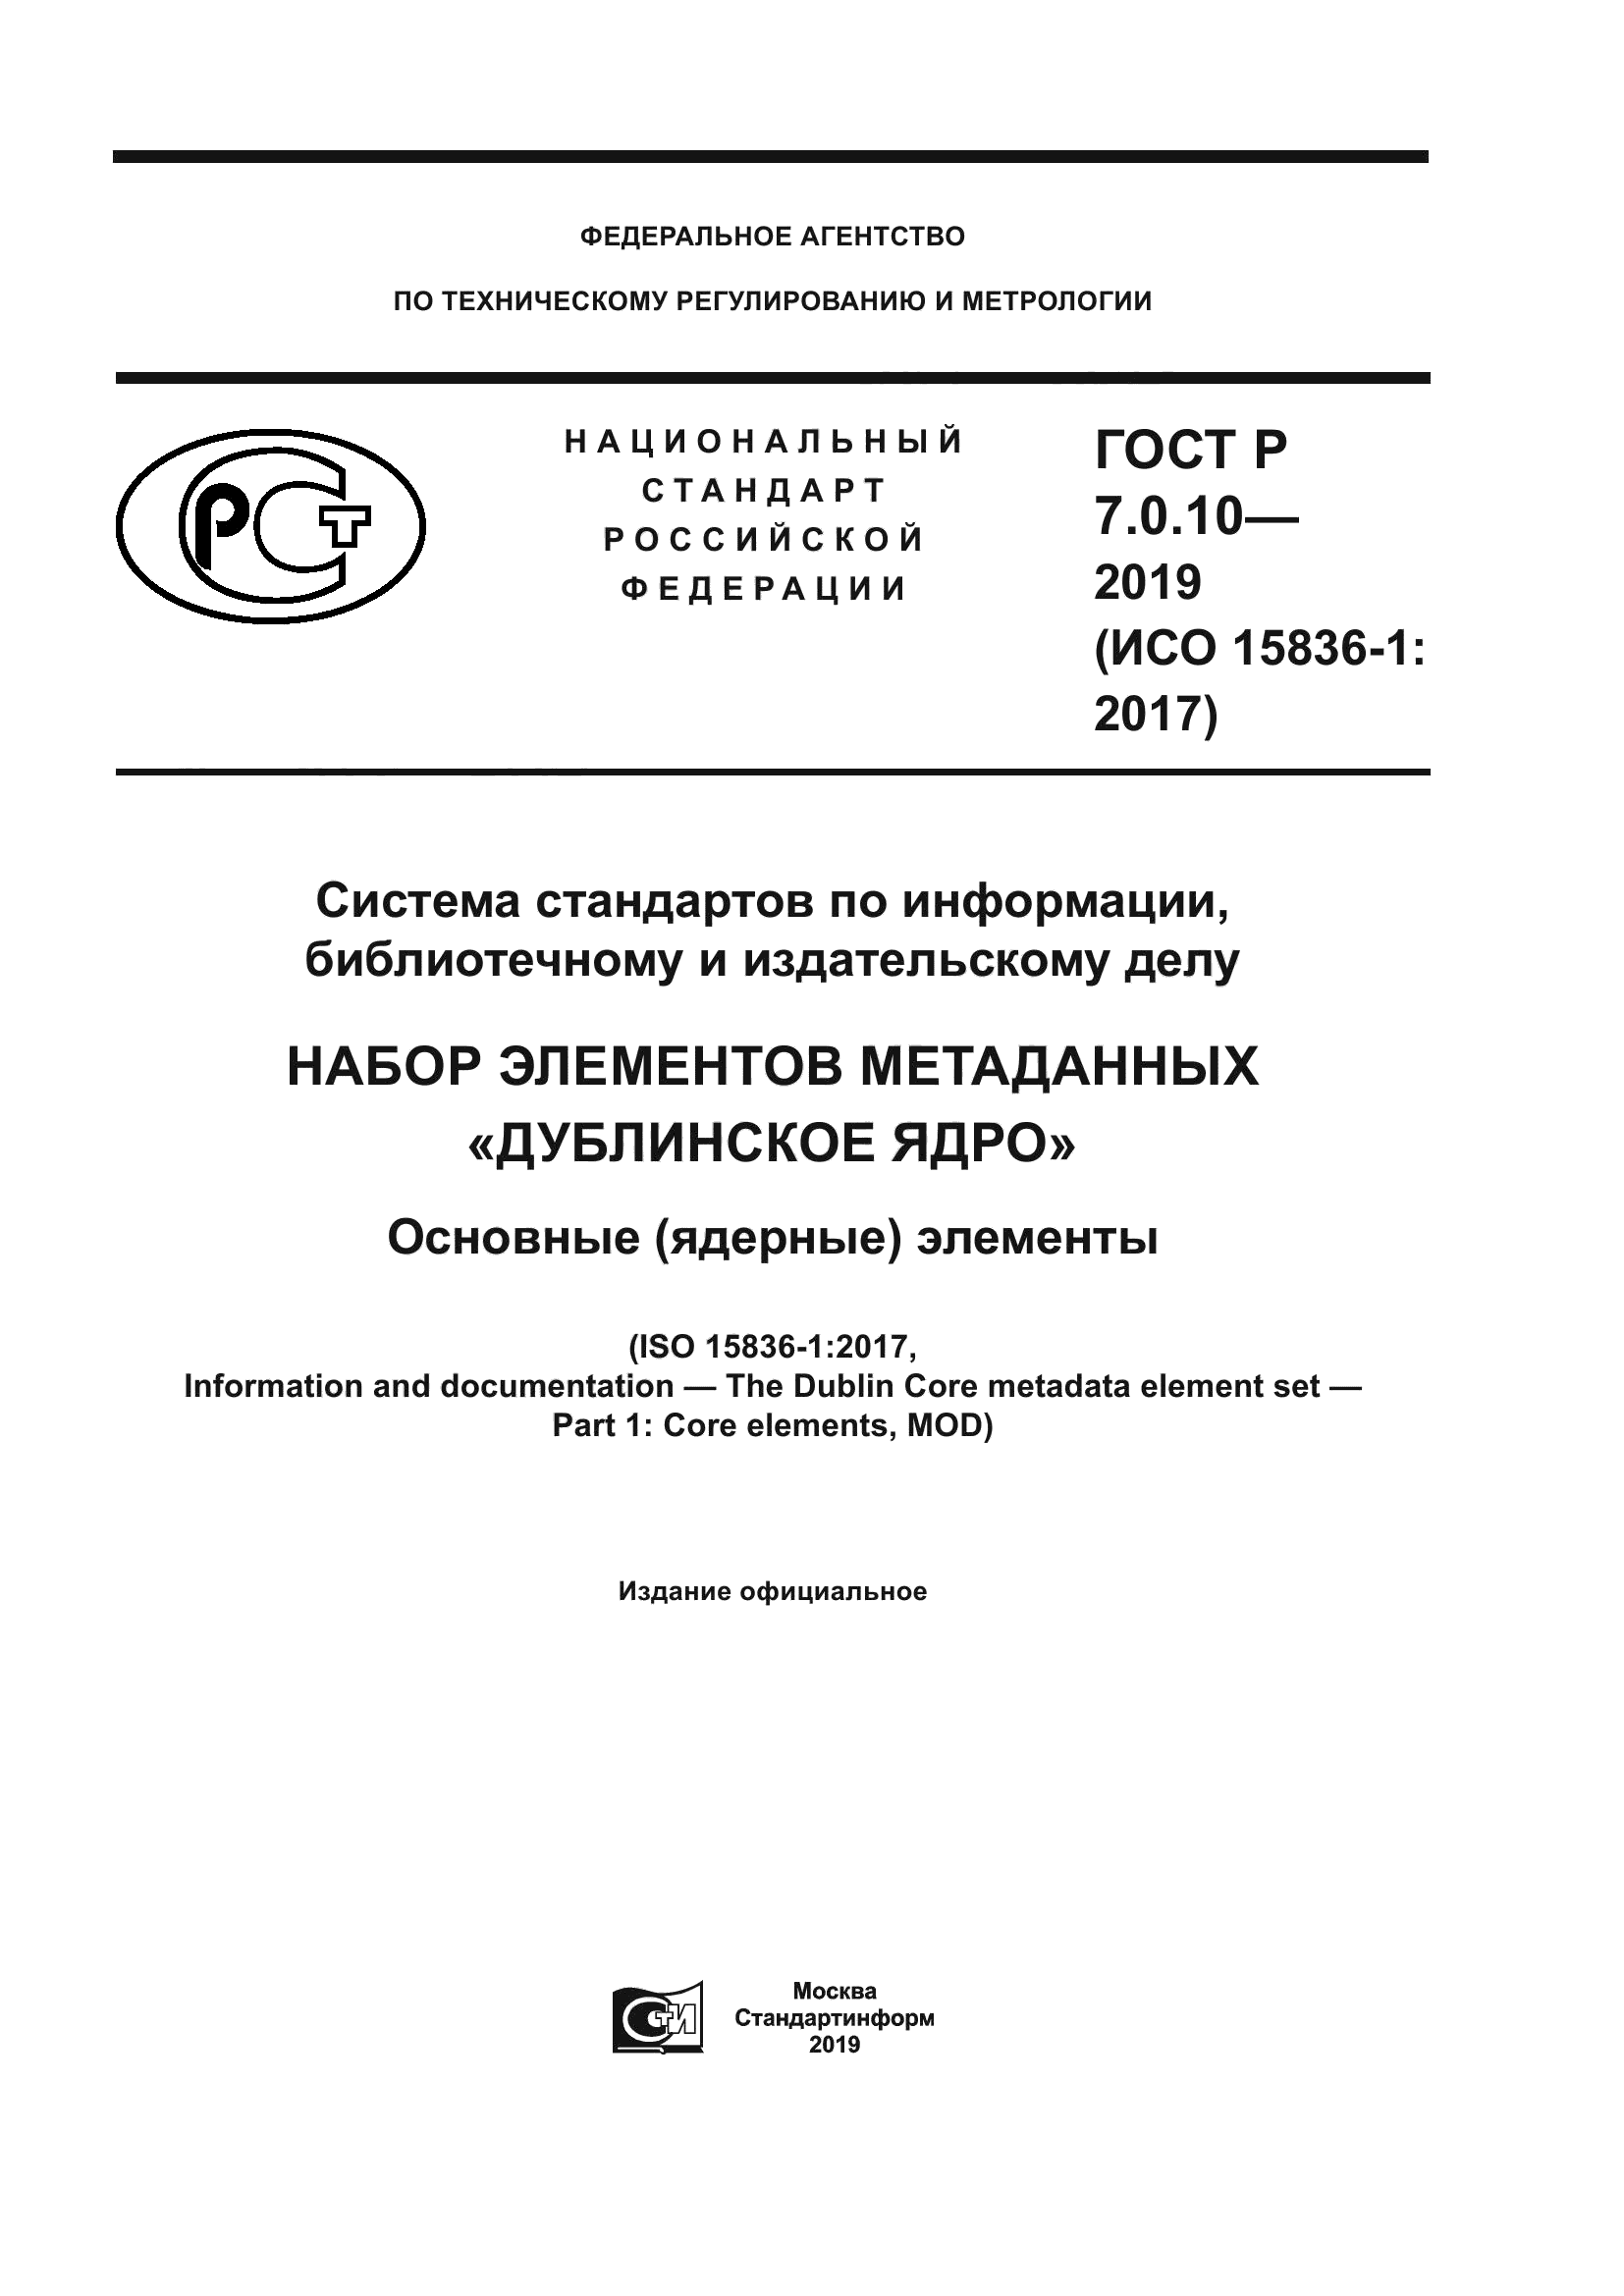 ГОСТ Р 7.0.10-2019